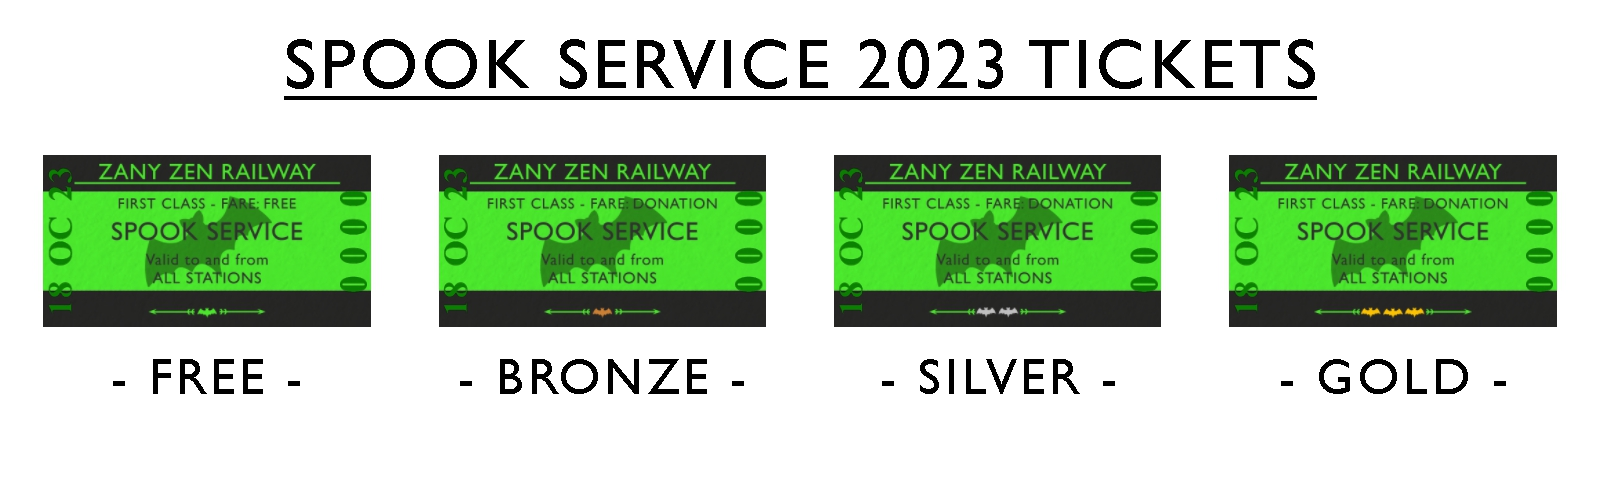 The Zany Zen Railway Spook Service Ticket Samples